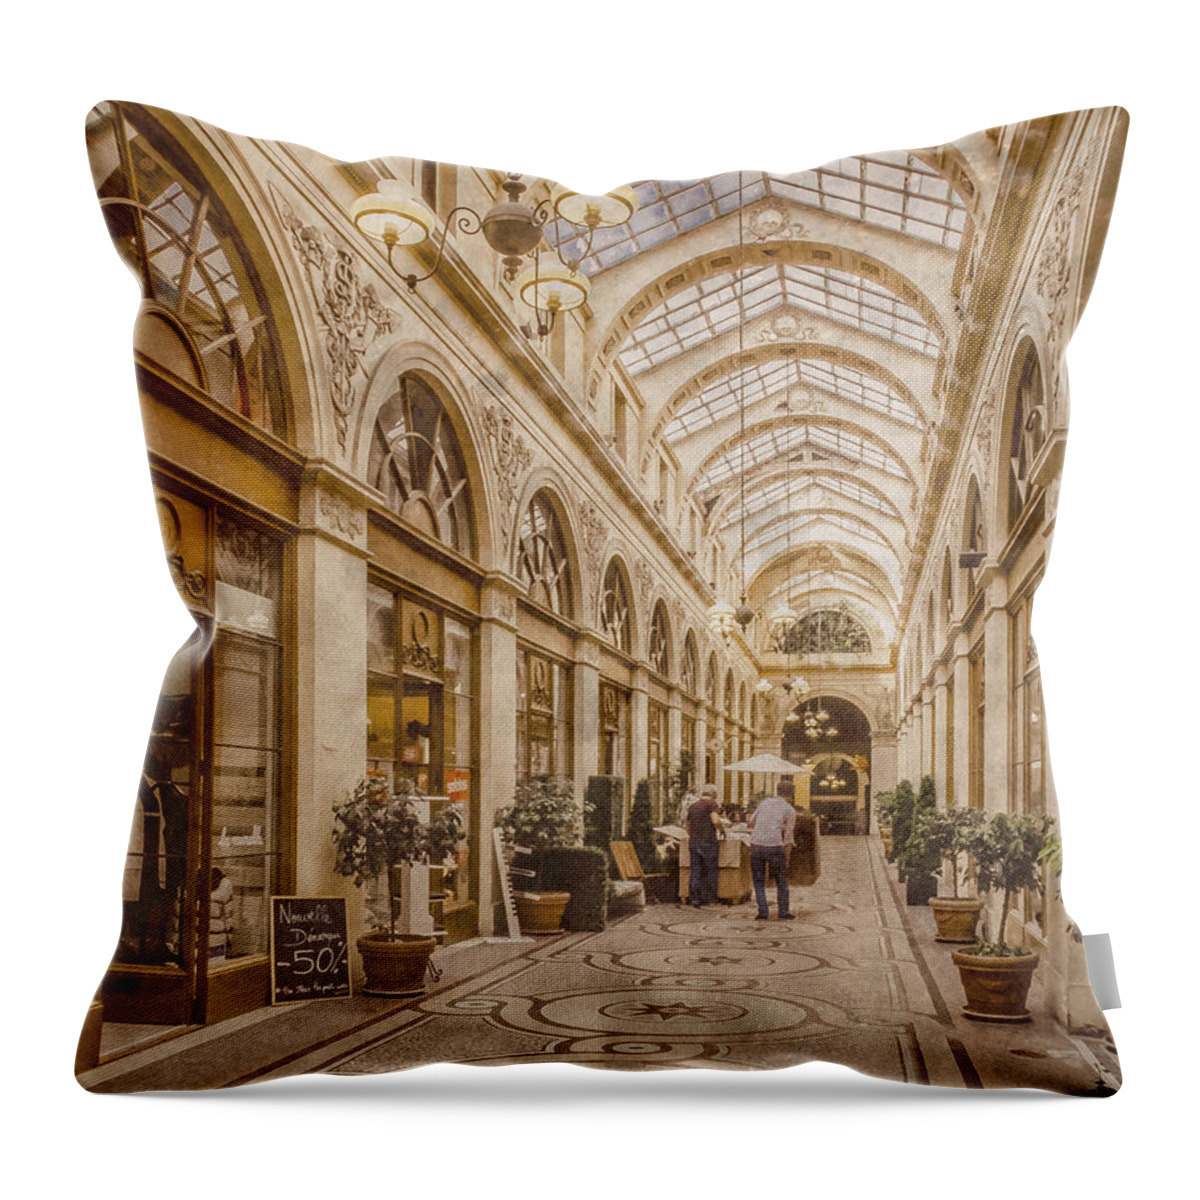 Paris Throw Pillow featuring the photograph Paris, France - Galerie Vivienne by Mark Forte